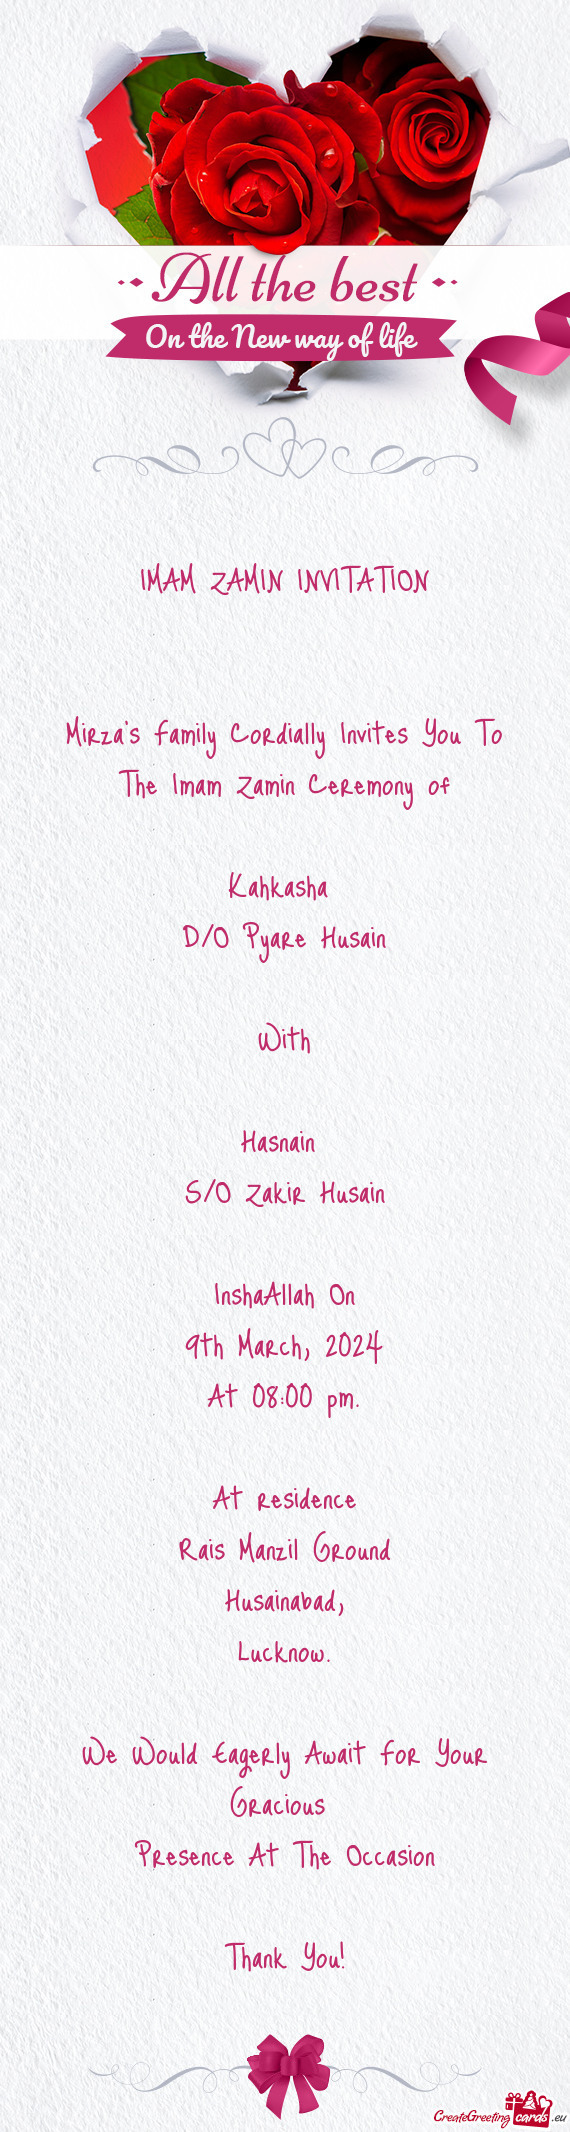 The Imam Zamin Ceremony of